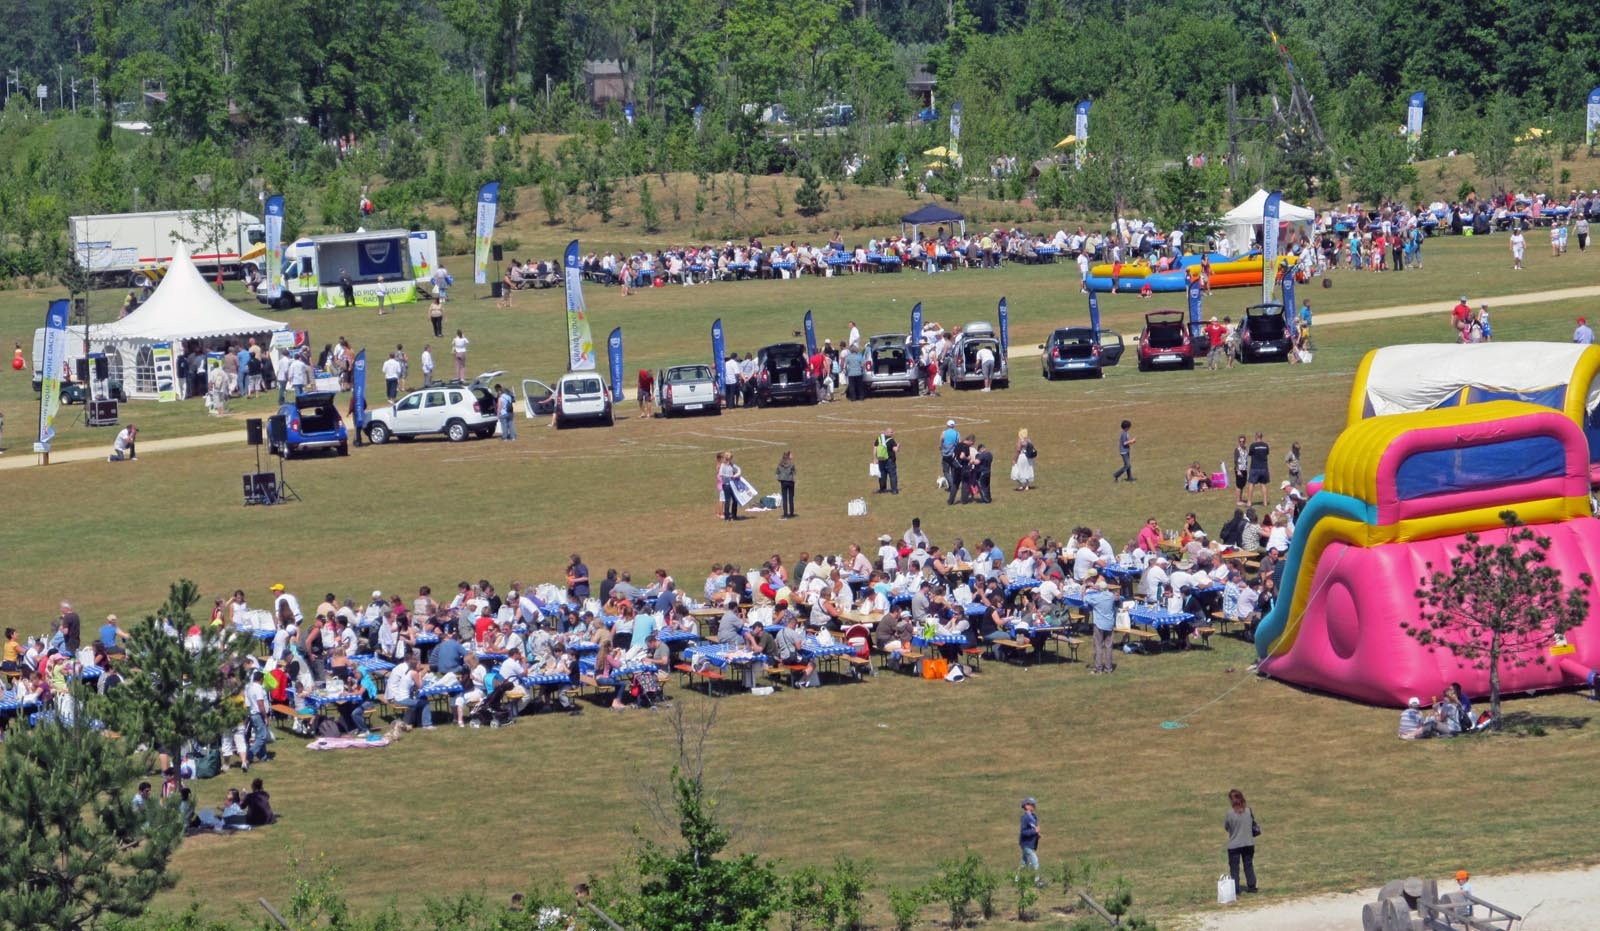 Un picnic Dacia pentru mii de persoane si un parc imens